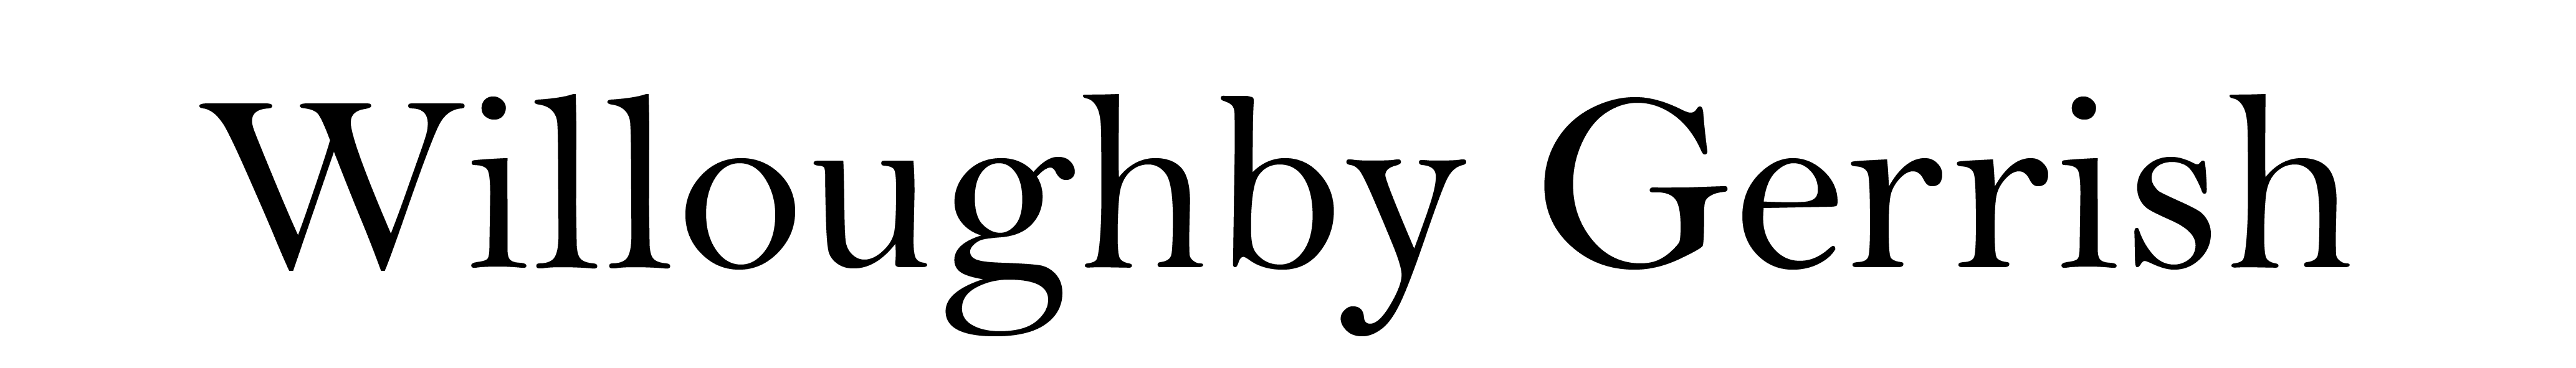 Willoughby Gerrish Ltd company logo